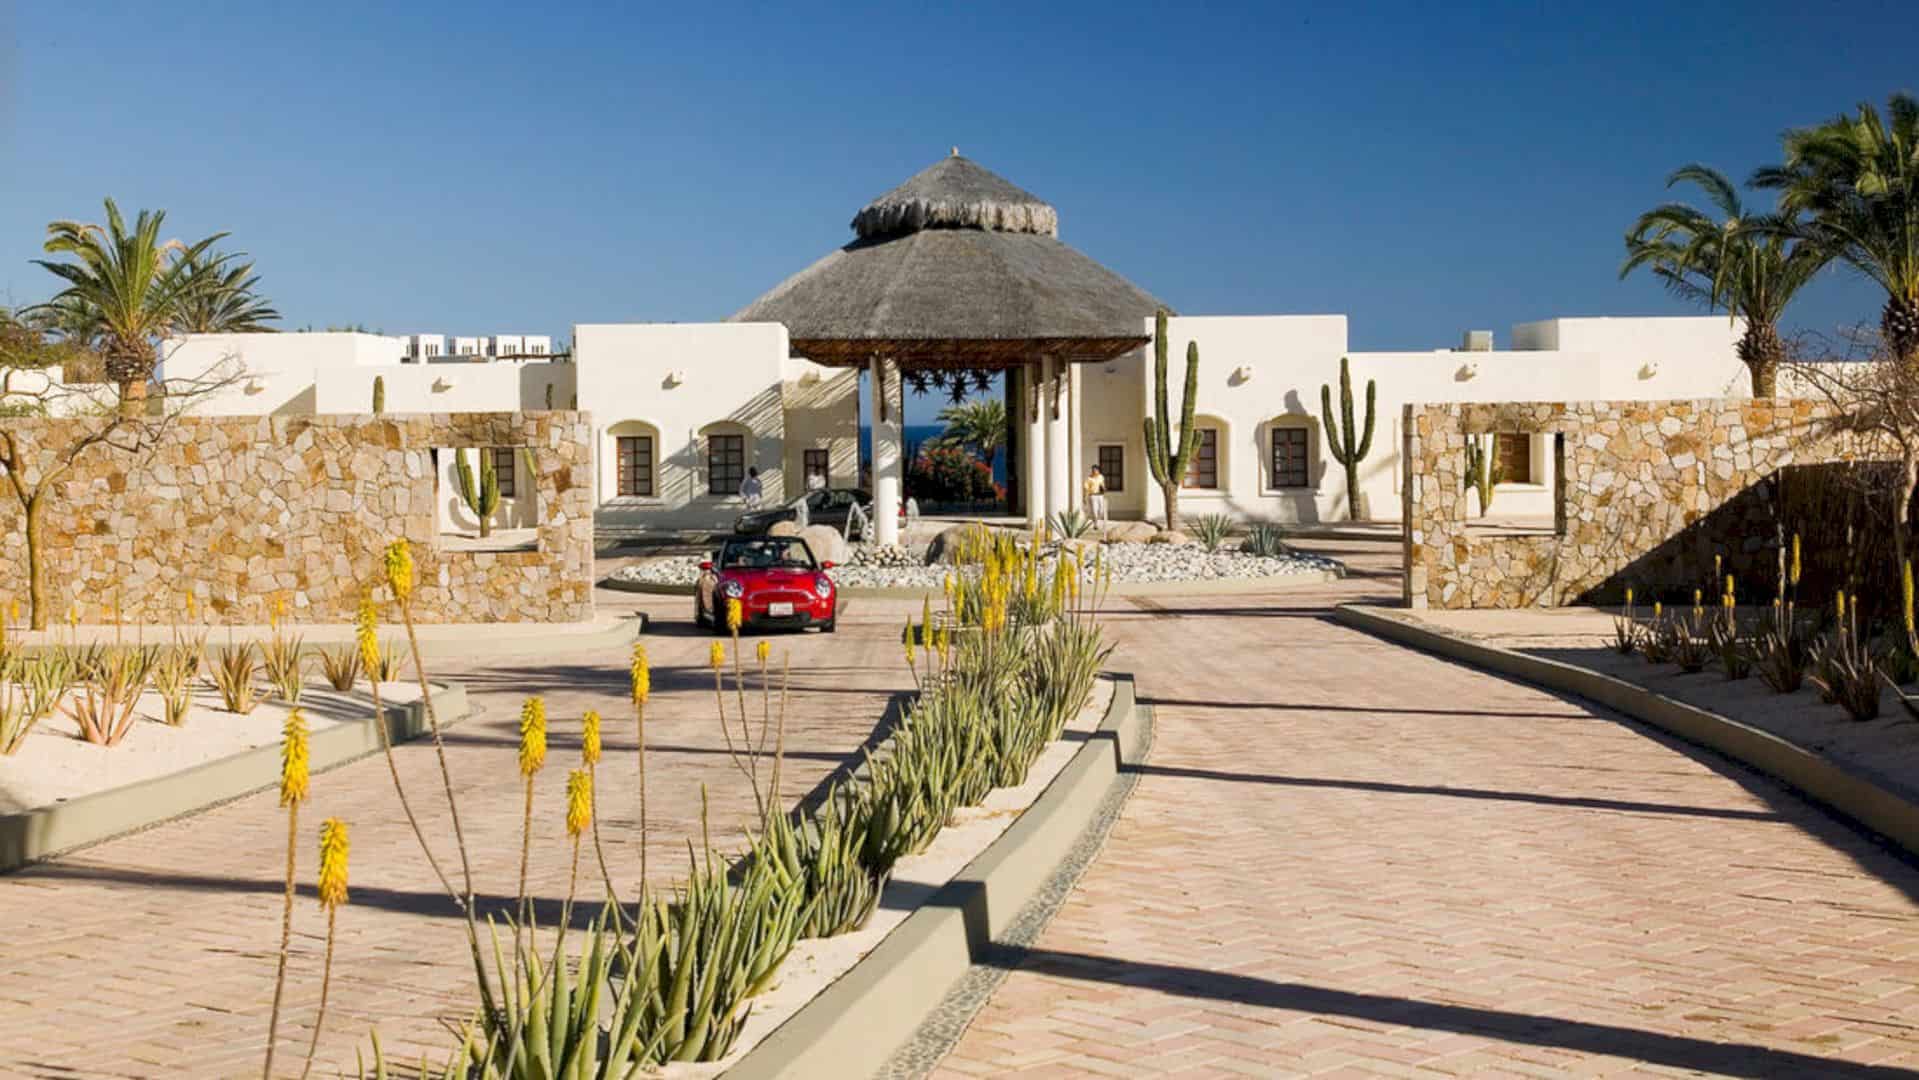 Las Ventanas Al Paraiso Award Winning Mexican Resort On A Seemingly Lifeless Landscape 12